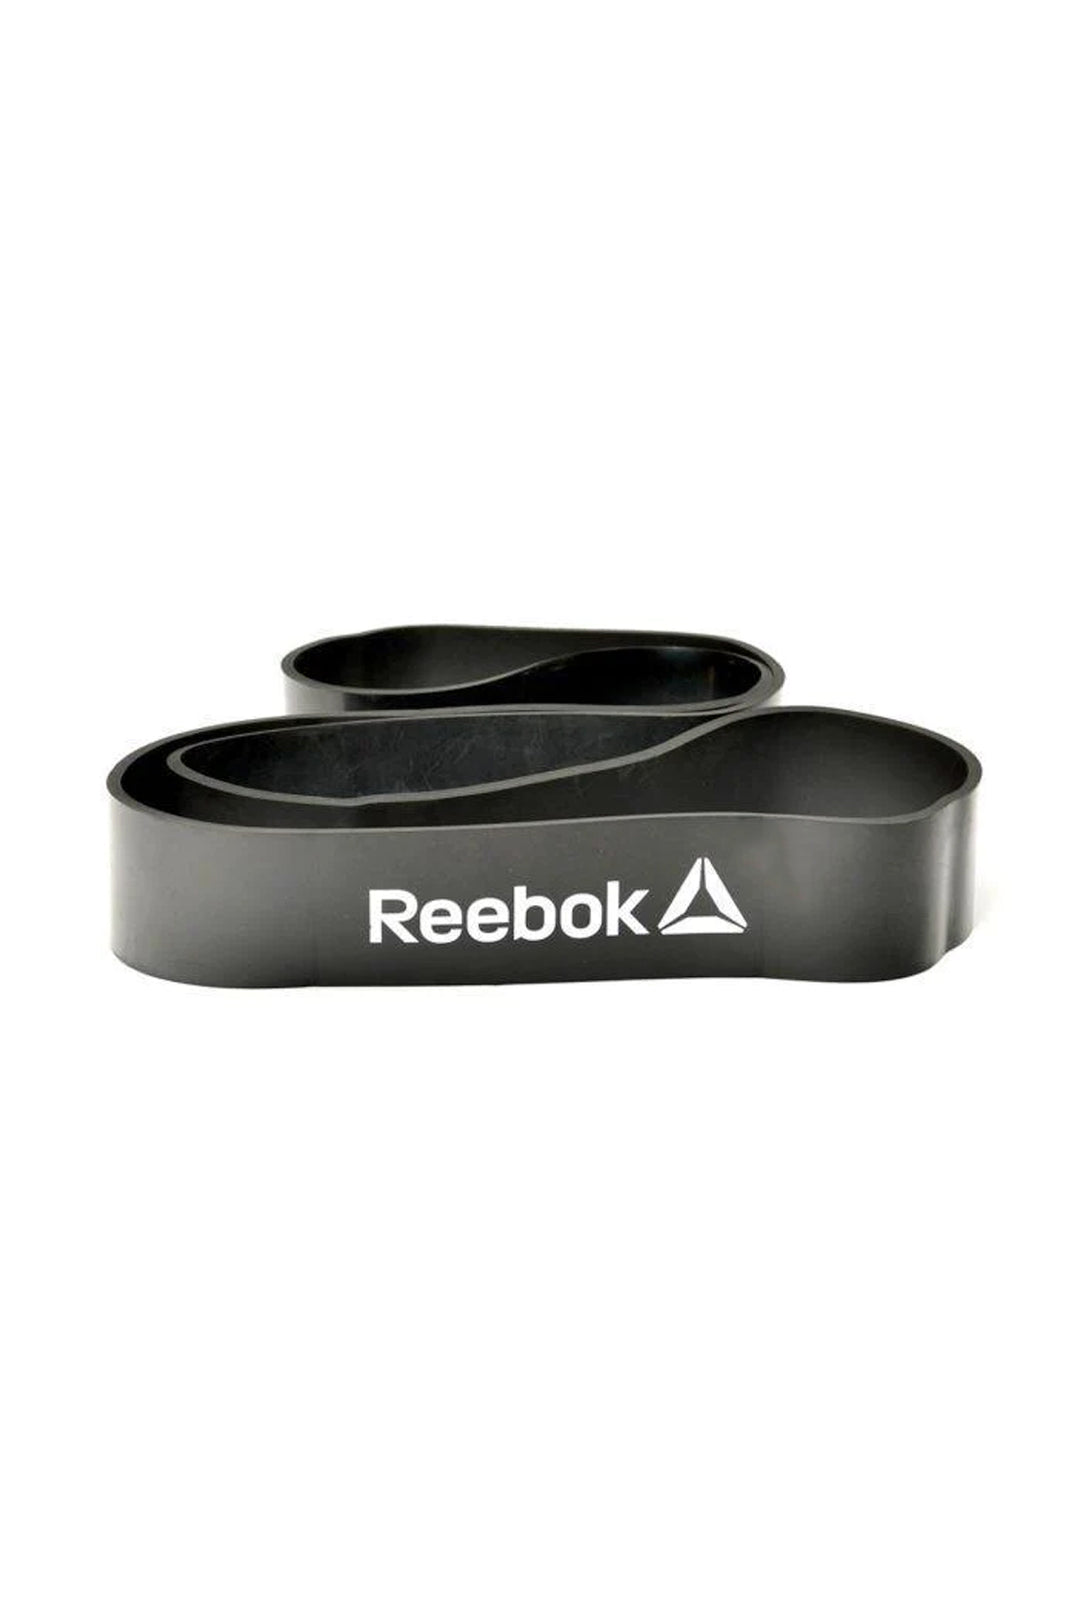 Reebok level 3 Power Band Black